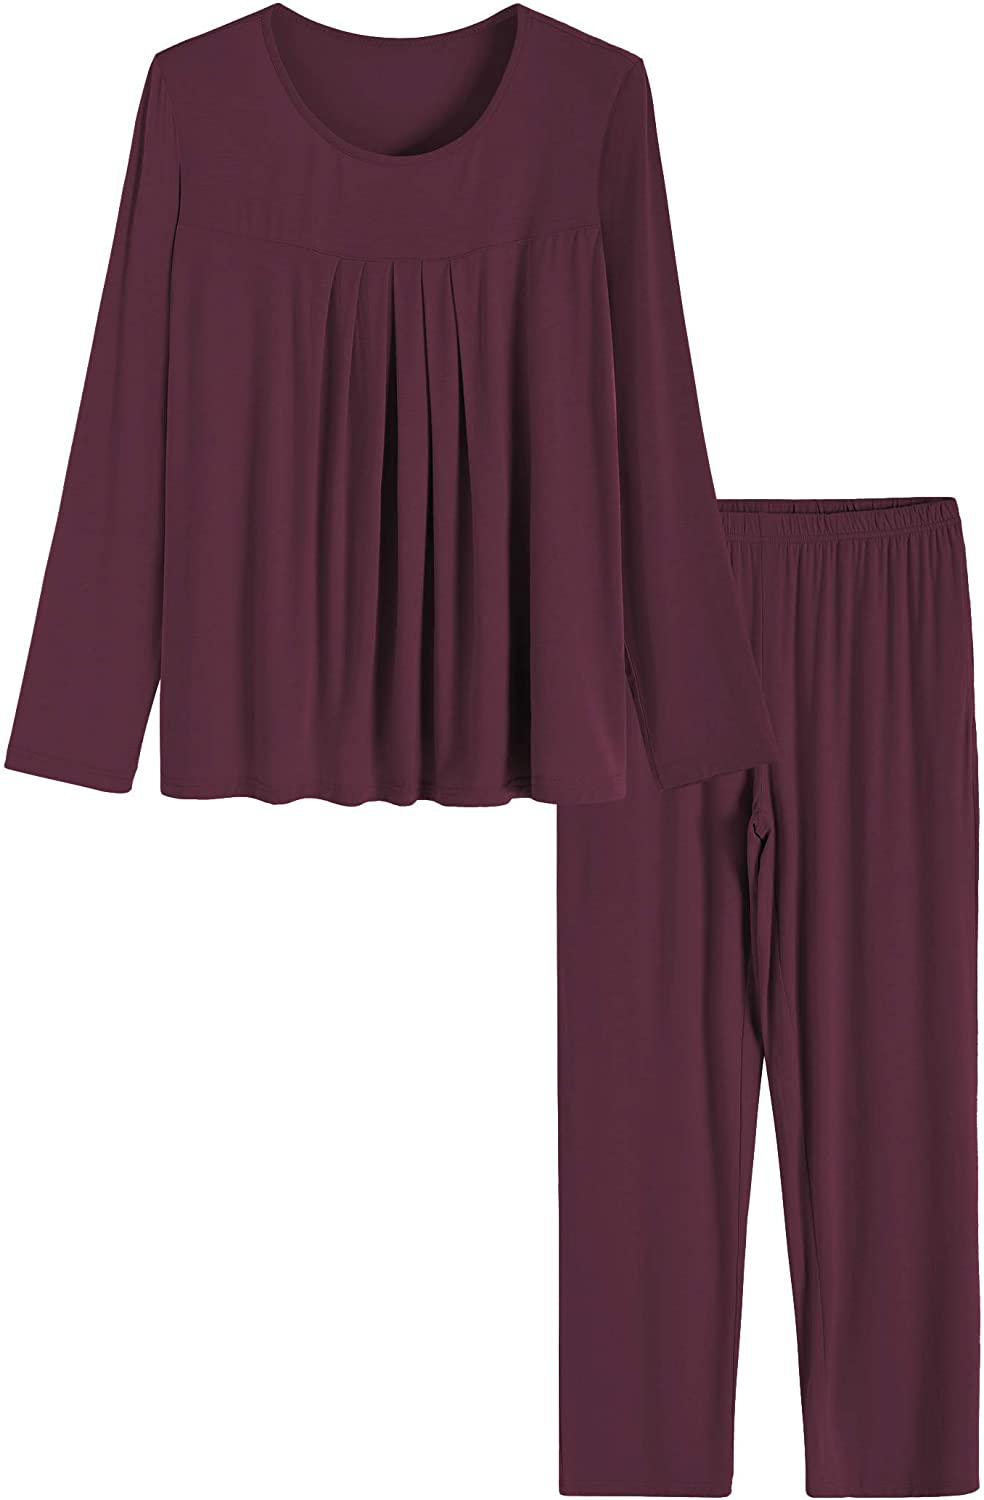 Latuza Women's Long Sleeves Pleated Front Tops Pajamas Pants with Pockets